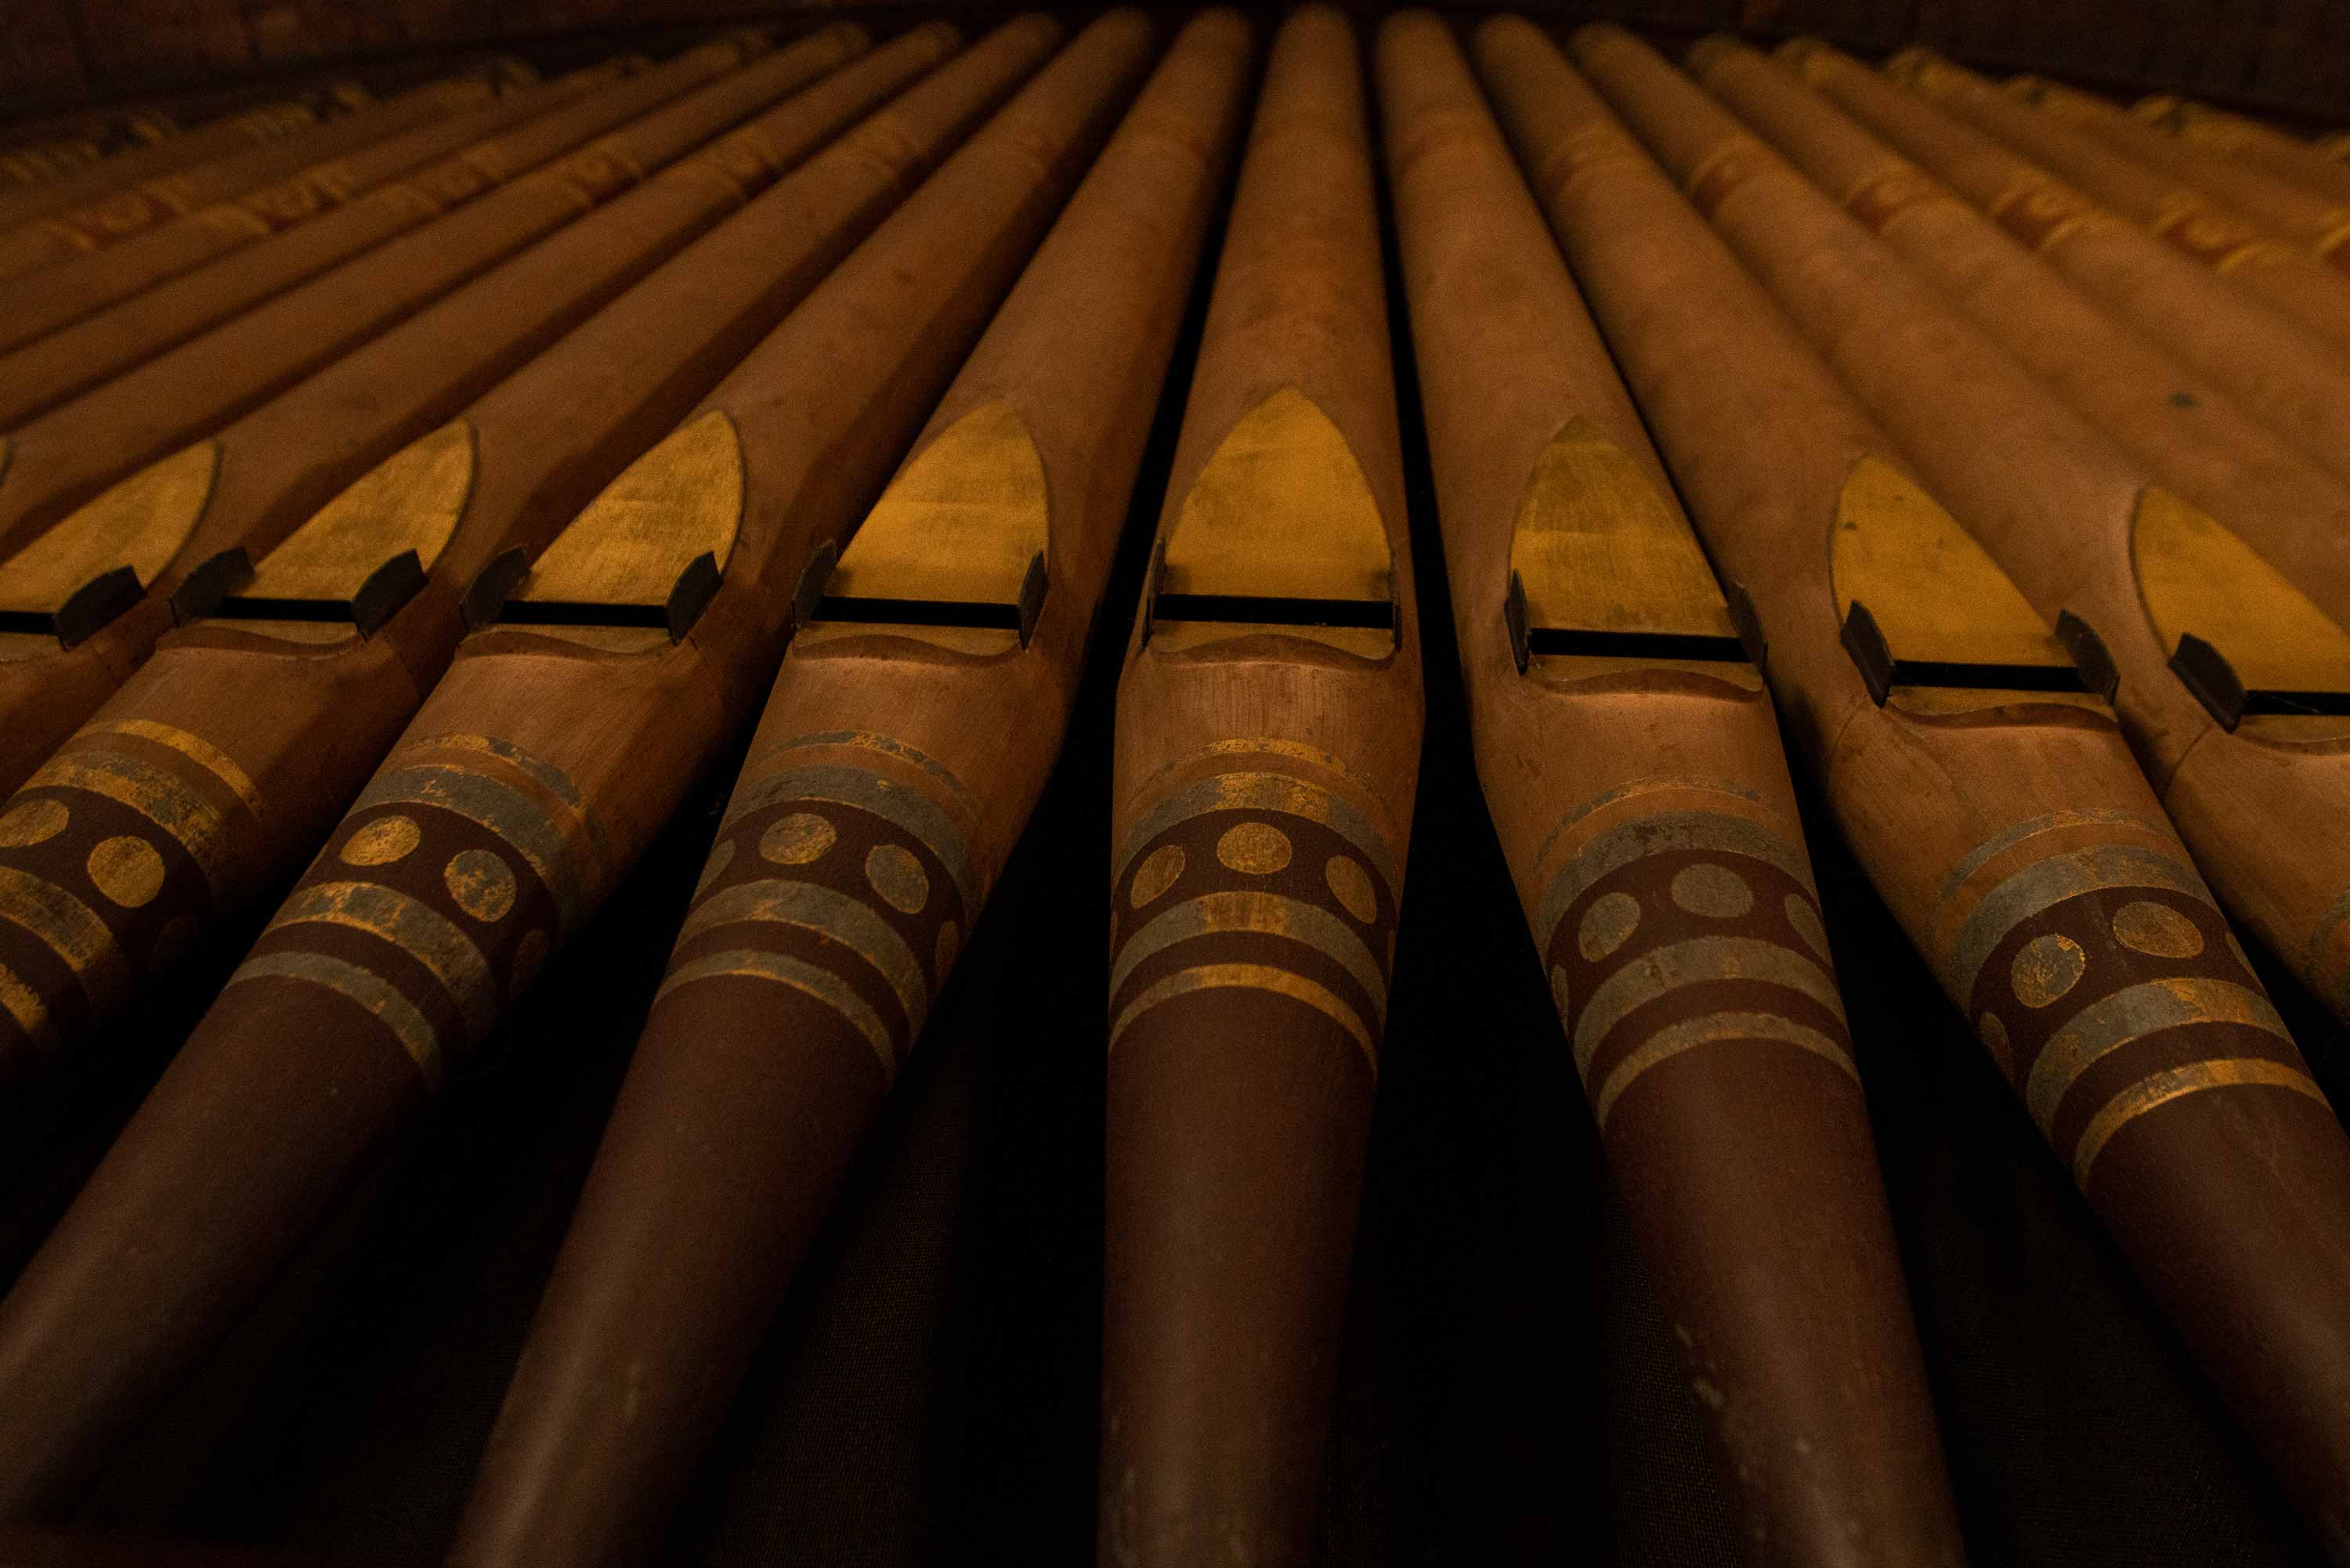 Chapel Organ Pipes